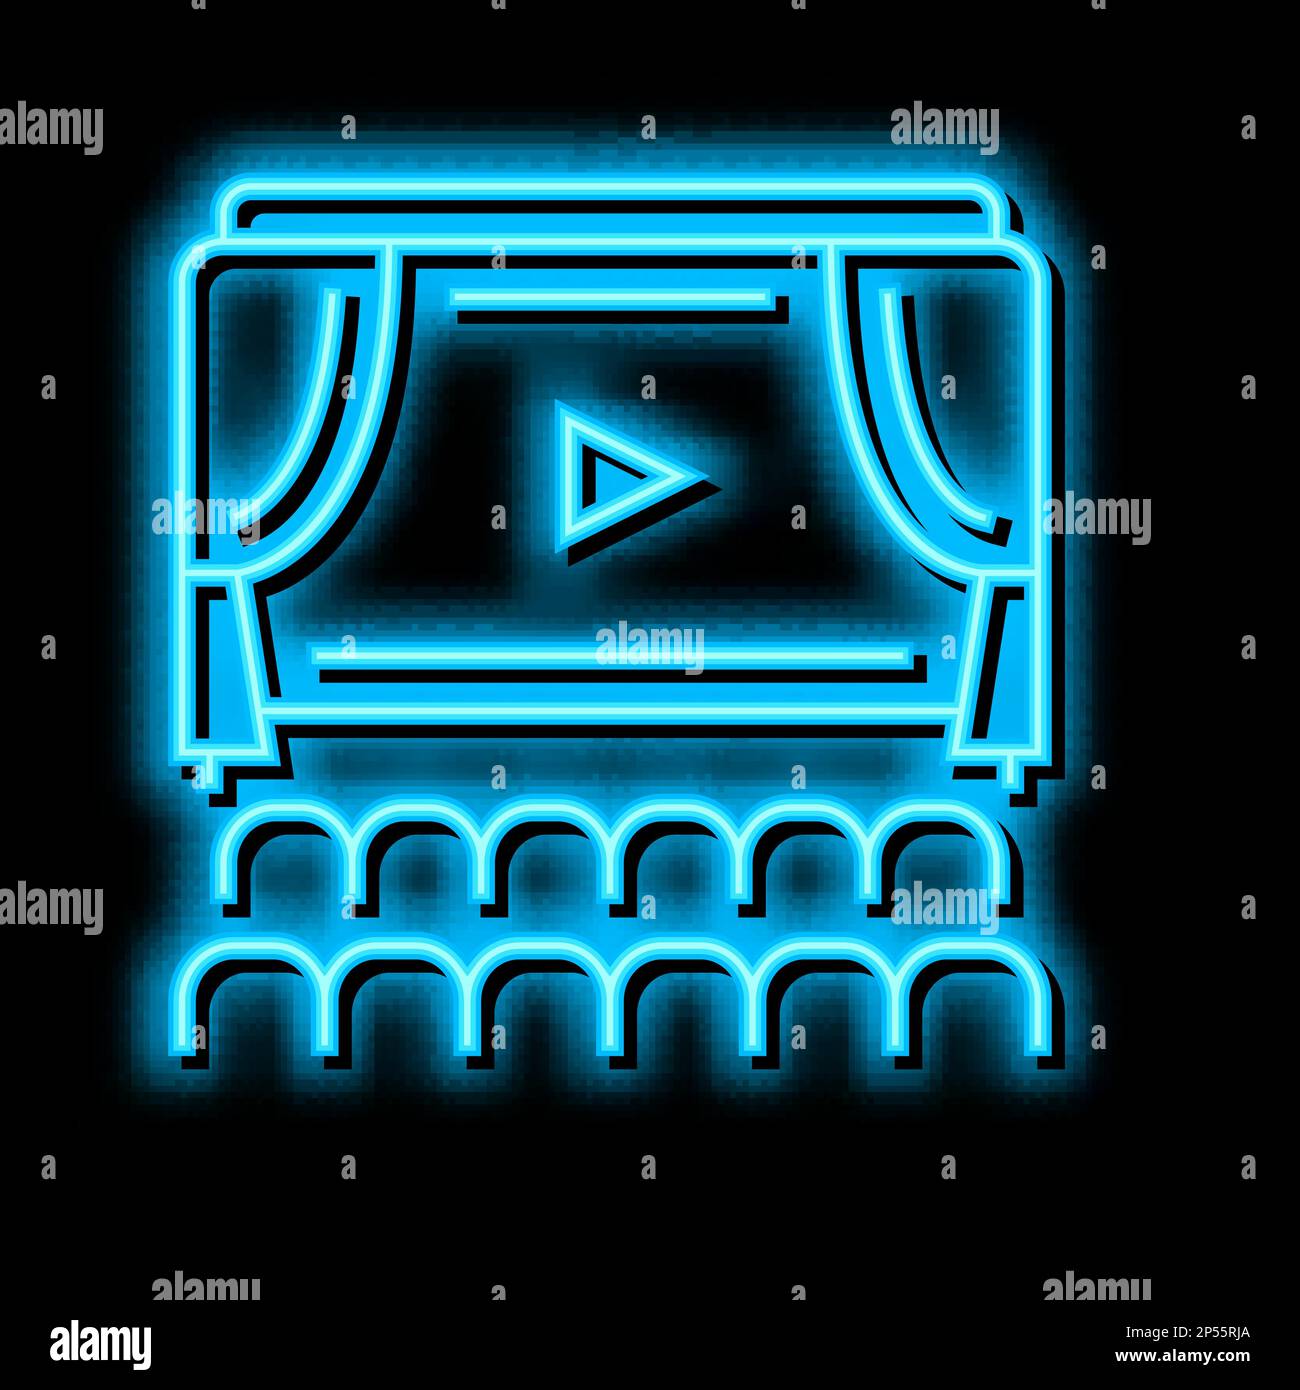 cinema display and seats neon glow icon illustration Stock Vector